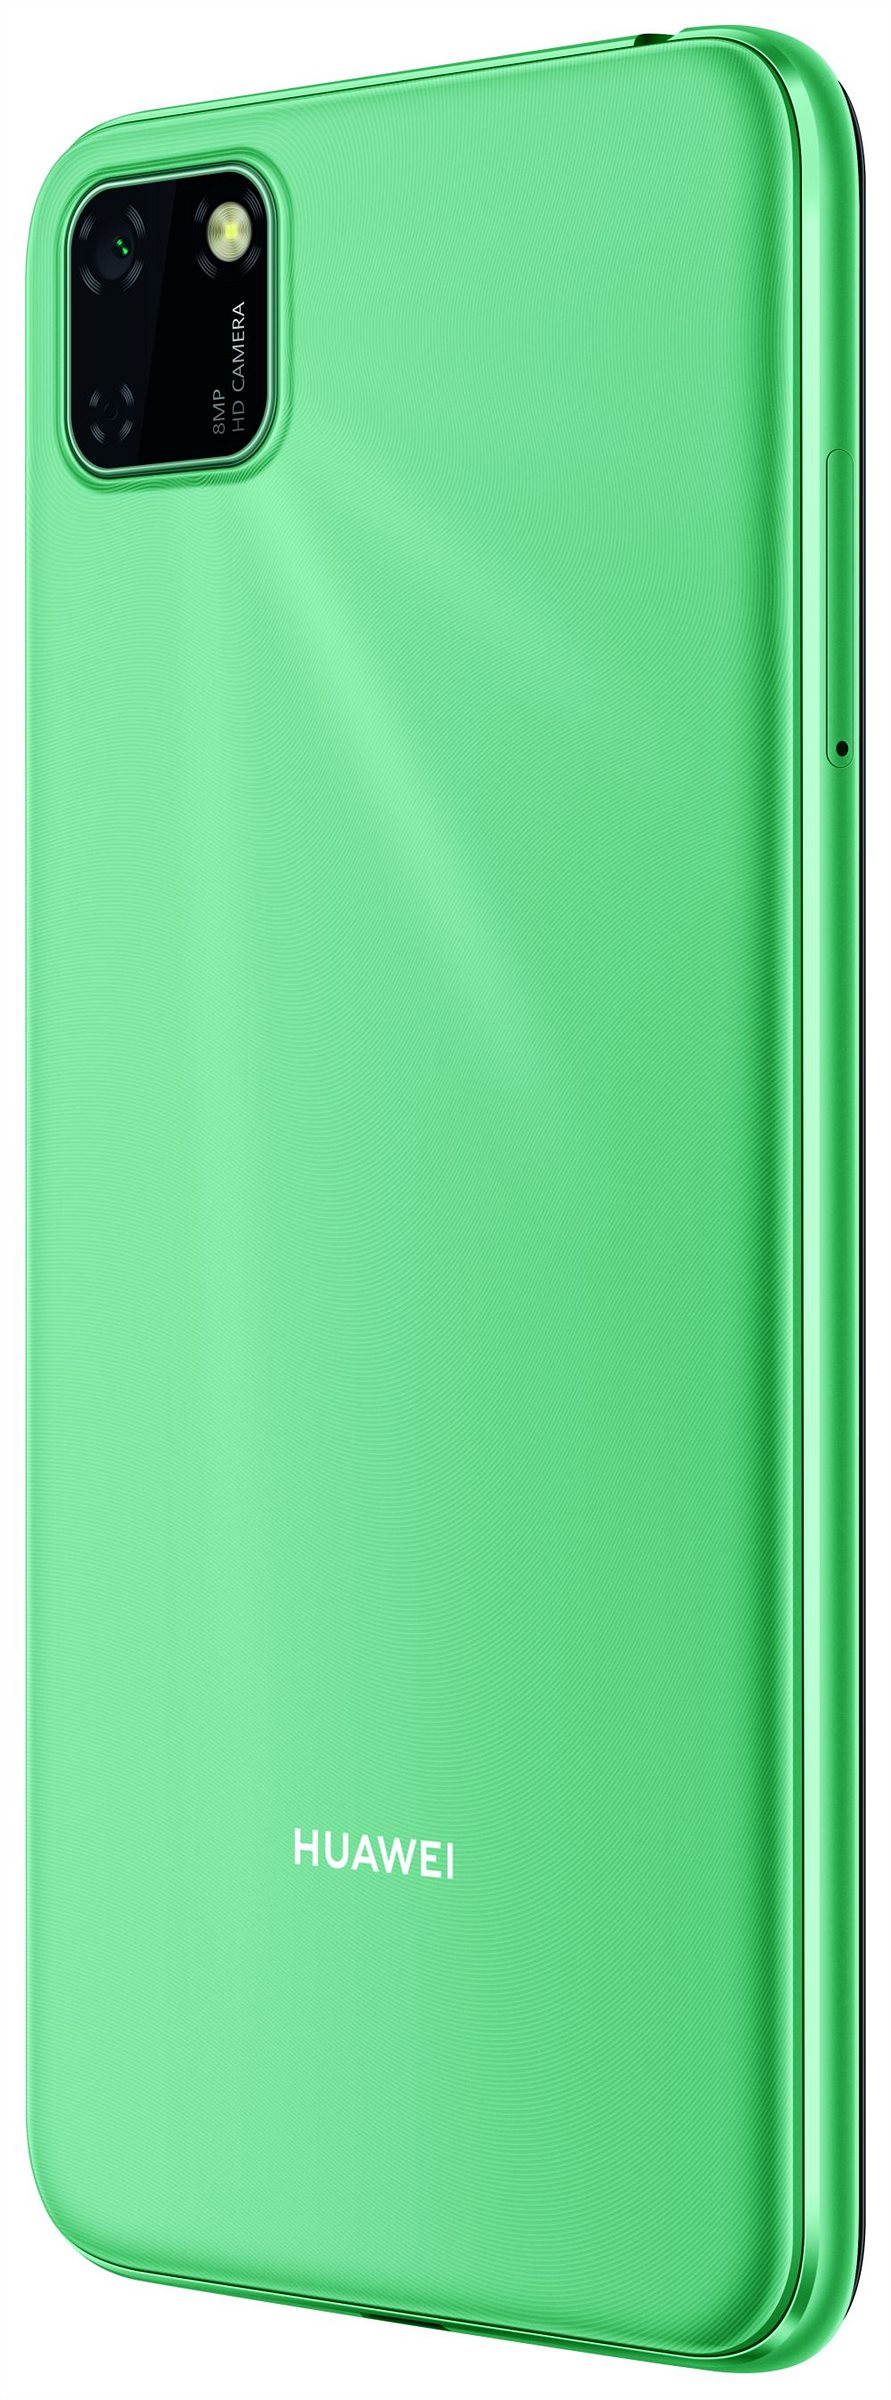 Y5P_Huawei_Mint Green 